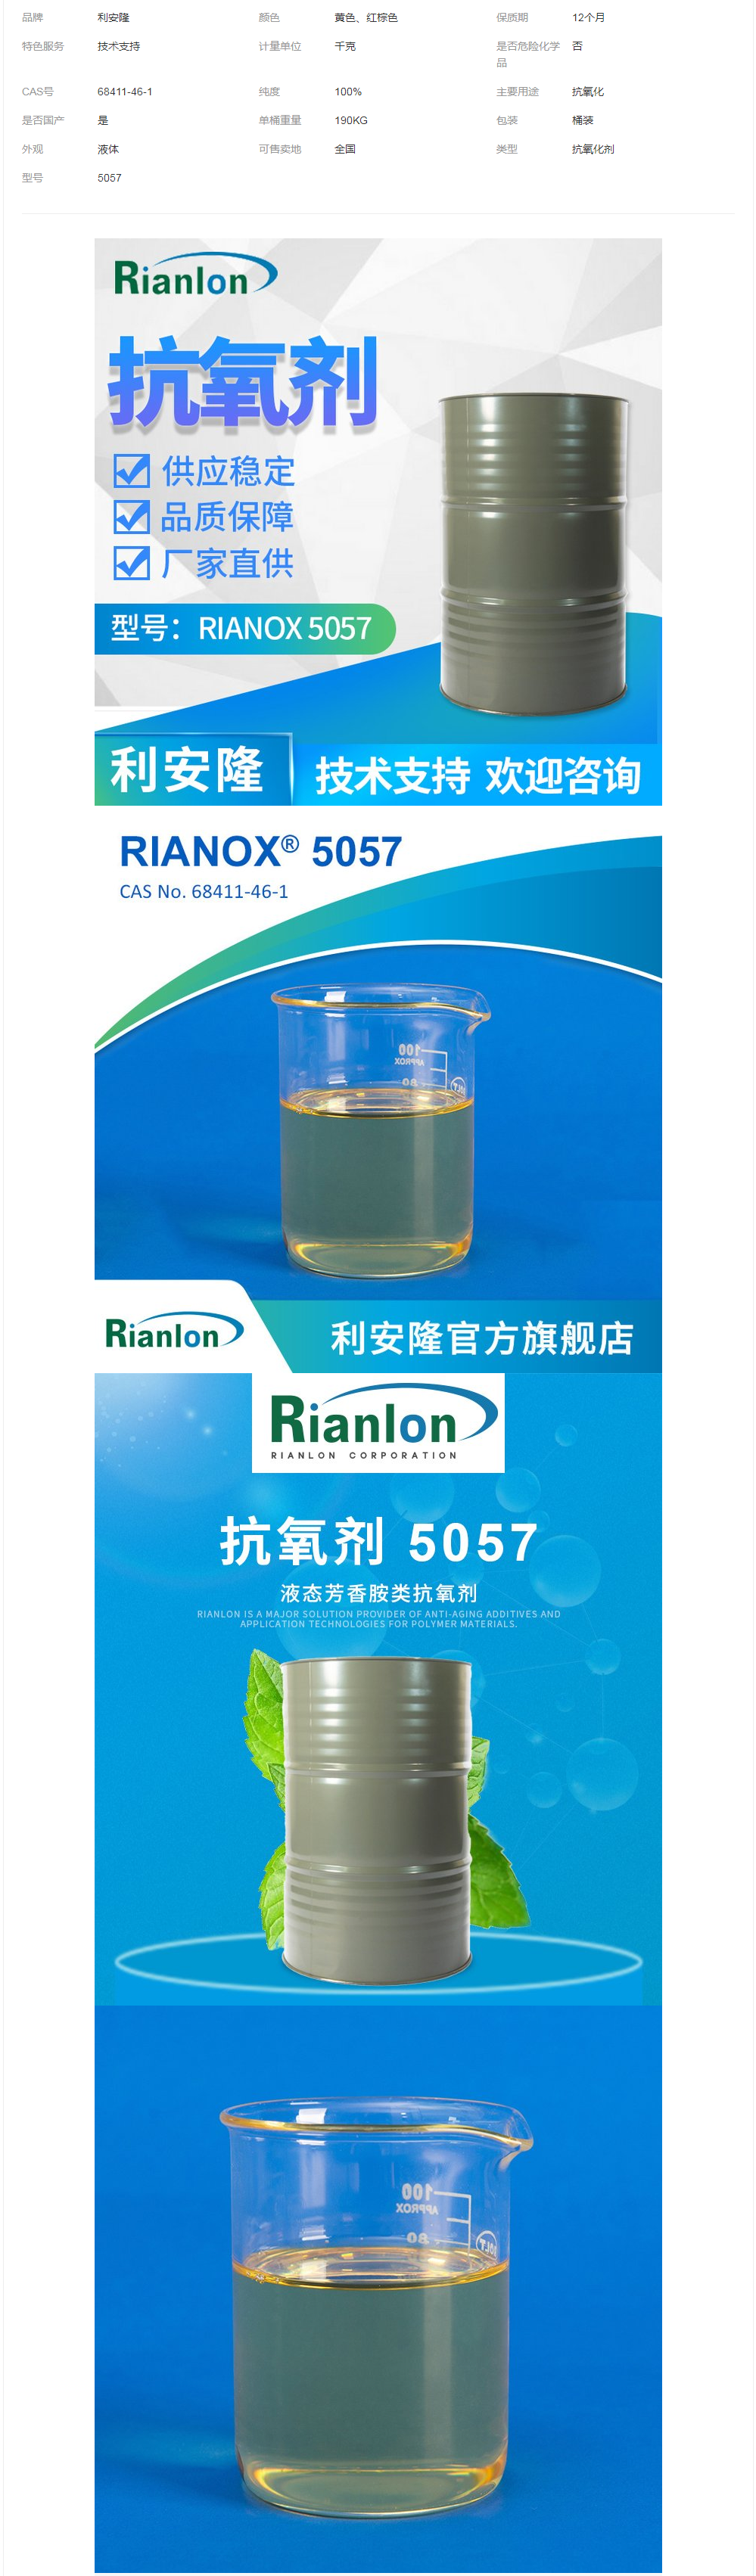 Rianlon利安隆抗氧剂聚氨酯多元醇抗烧芯热氧化抗氧化剂5057.png